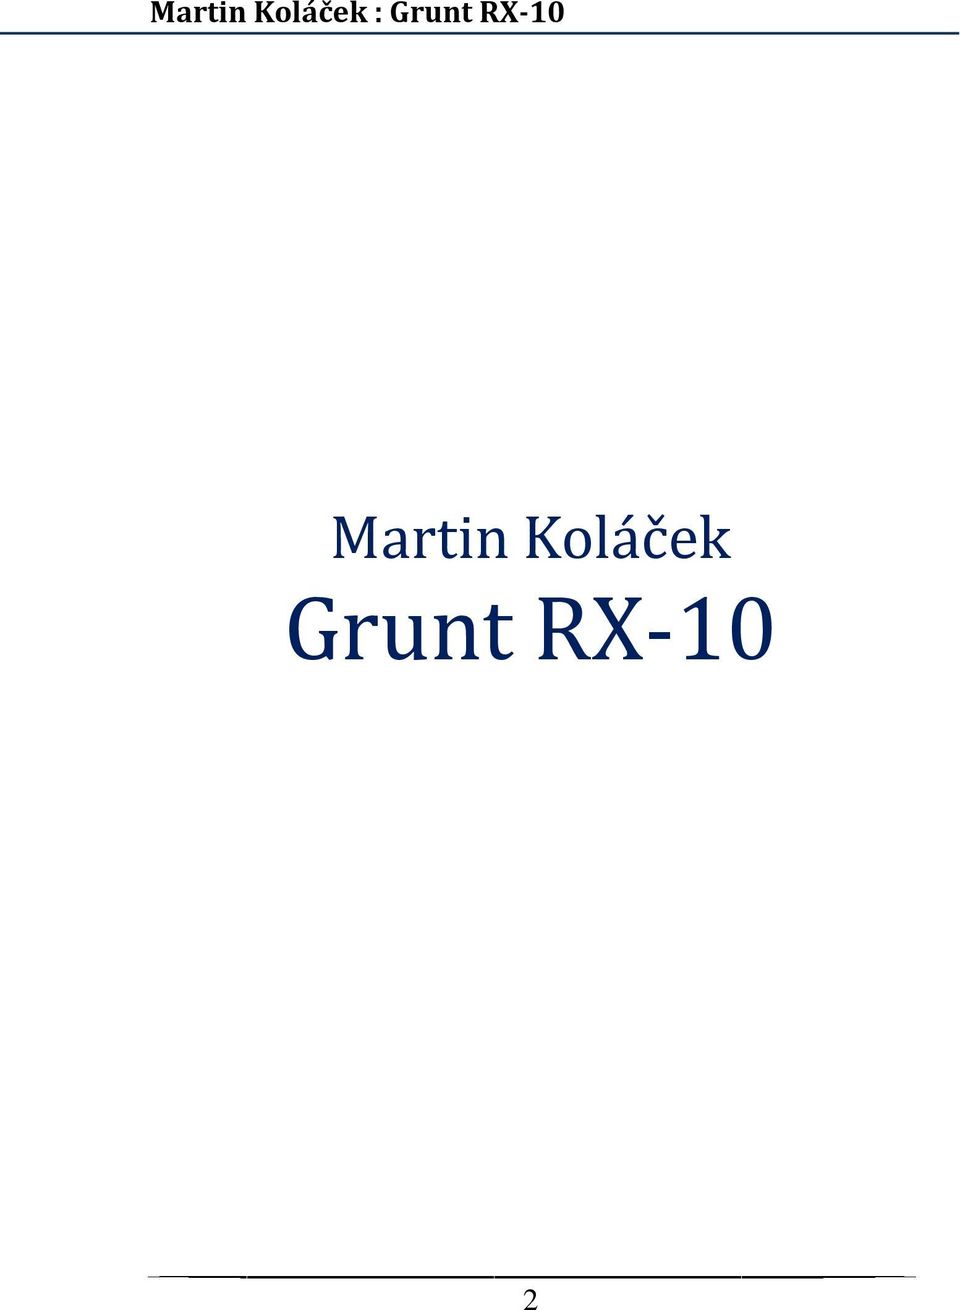 Grunt RX-10 2